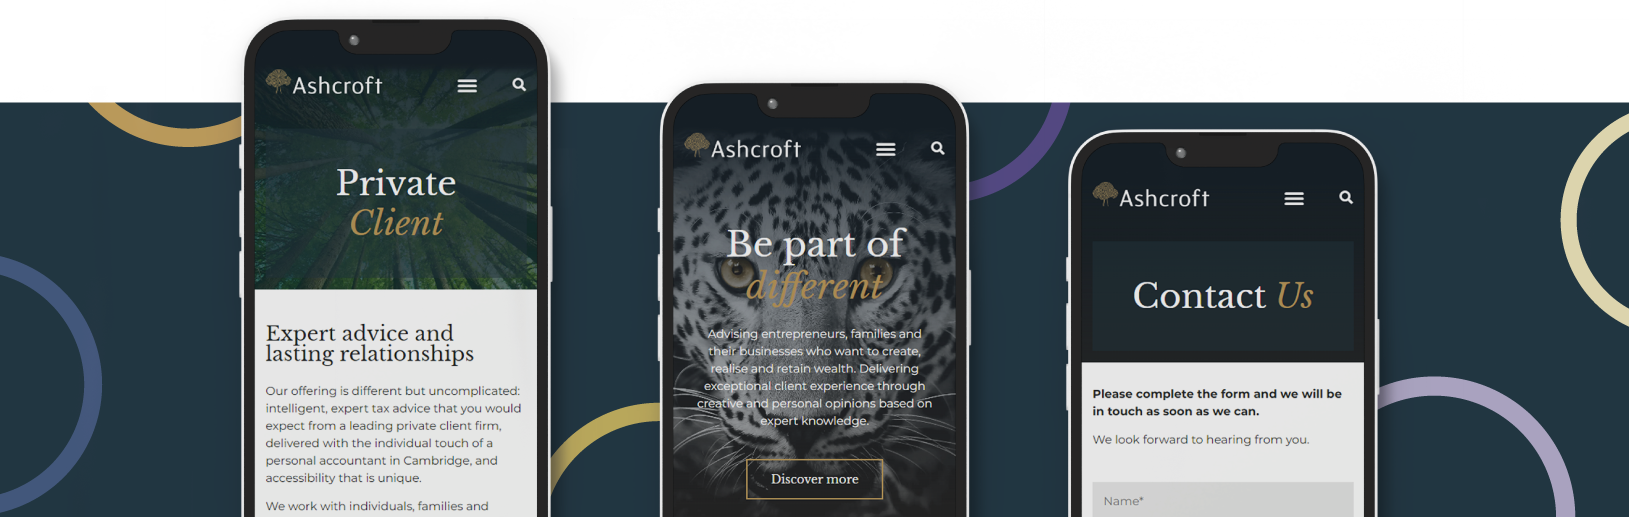 Ashcroft Partnership Mobile Friendly Website Build